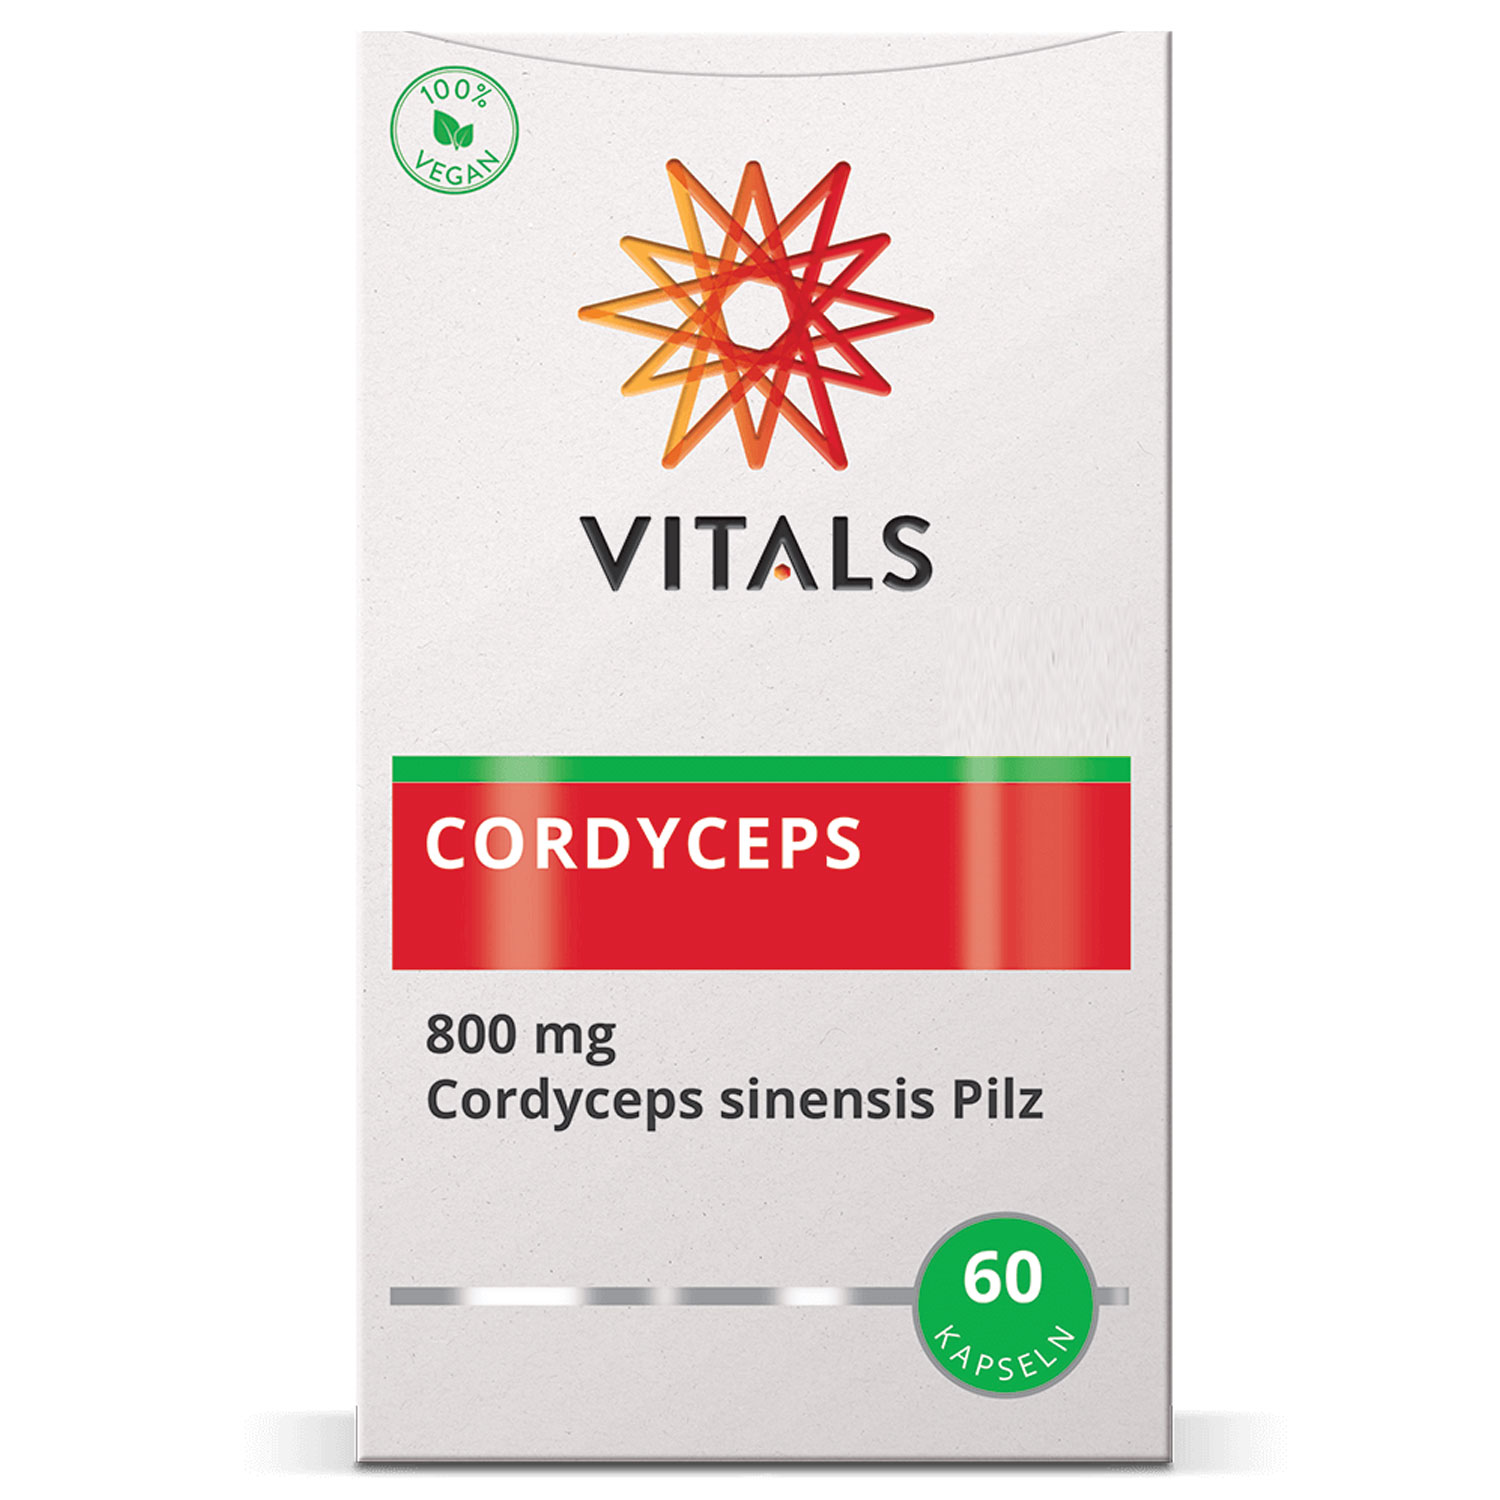 Cordyceps von Vitals - Verpackung